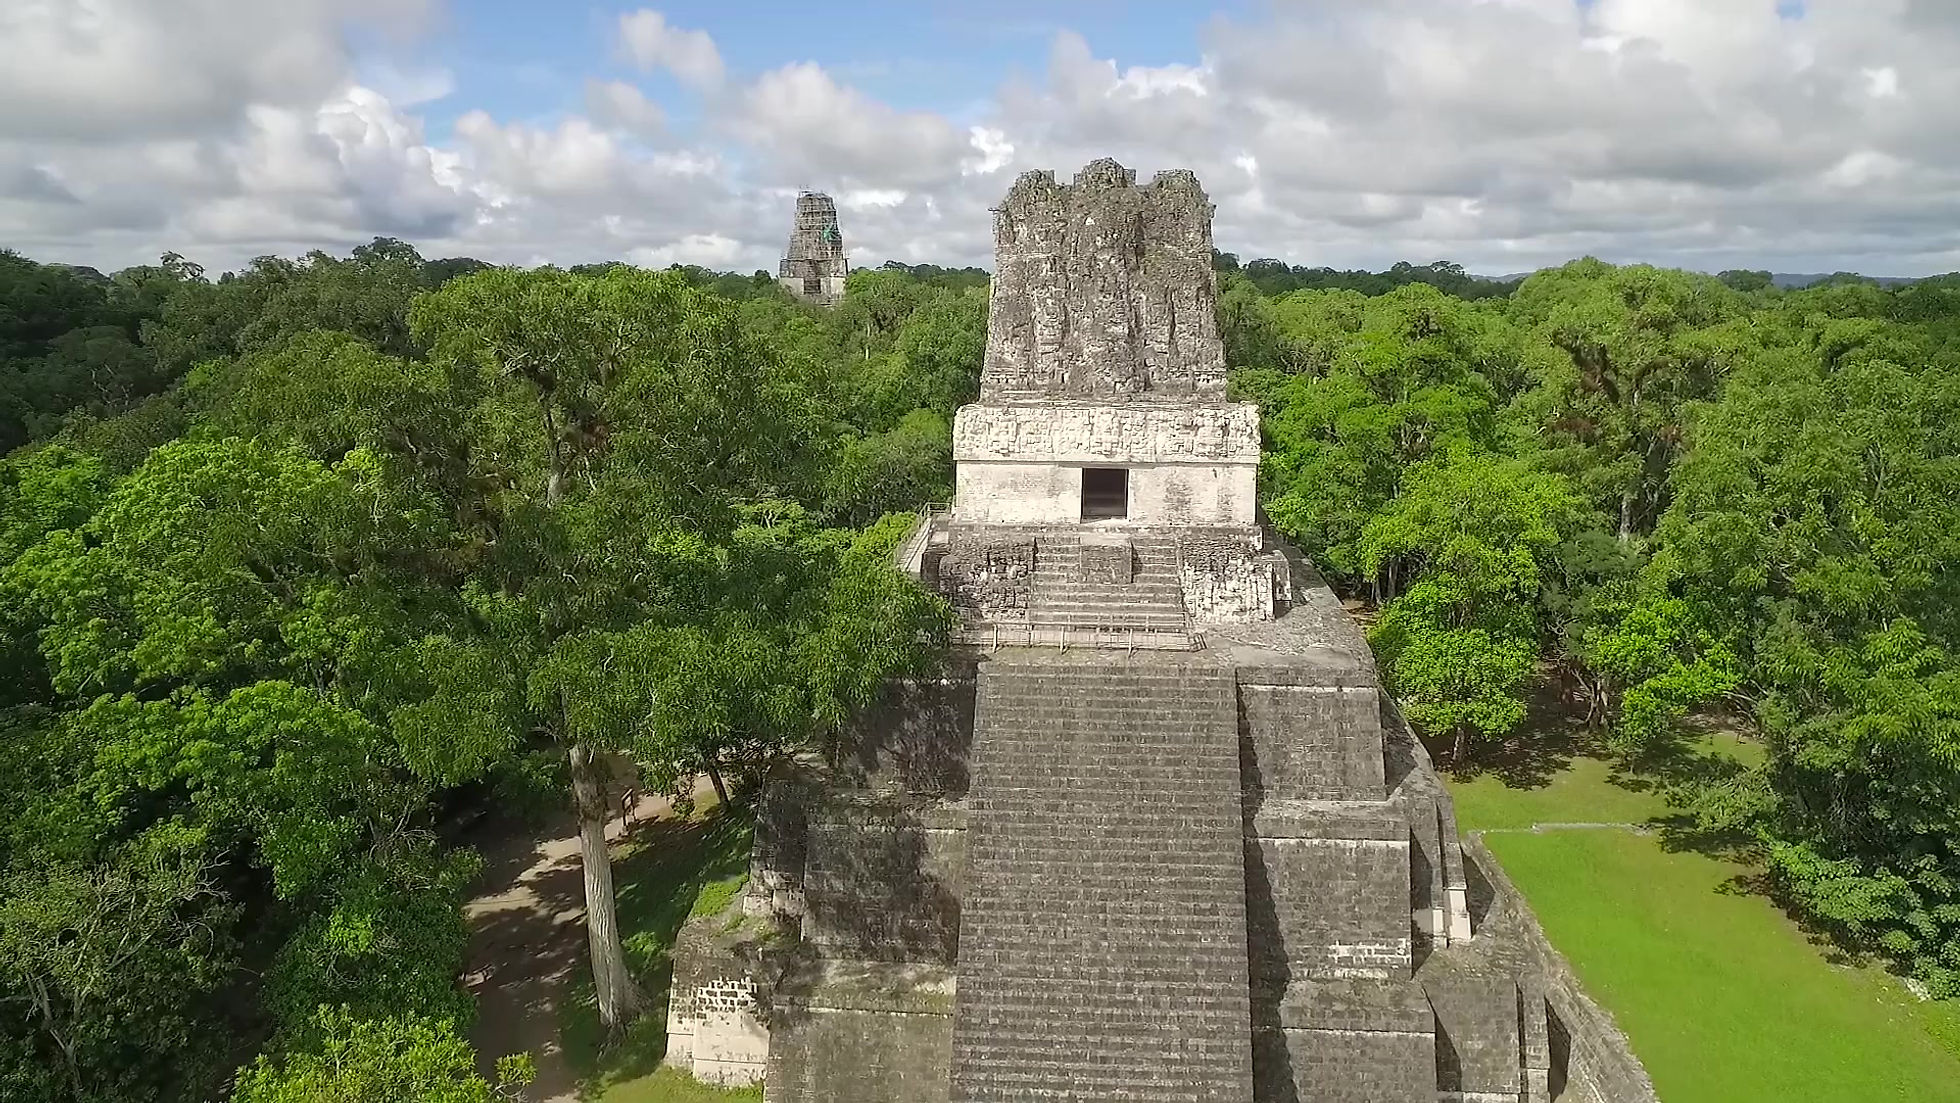 Lost Kingdoms of the Maya